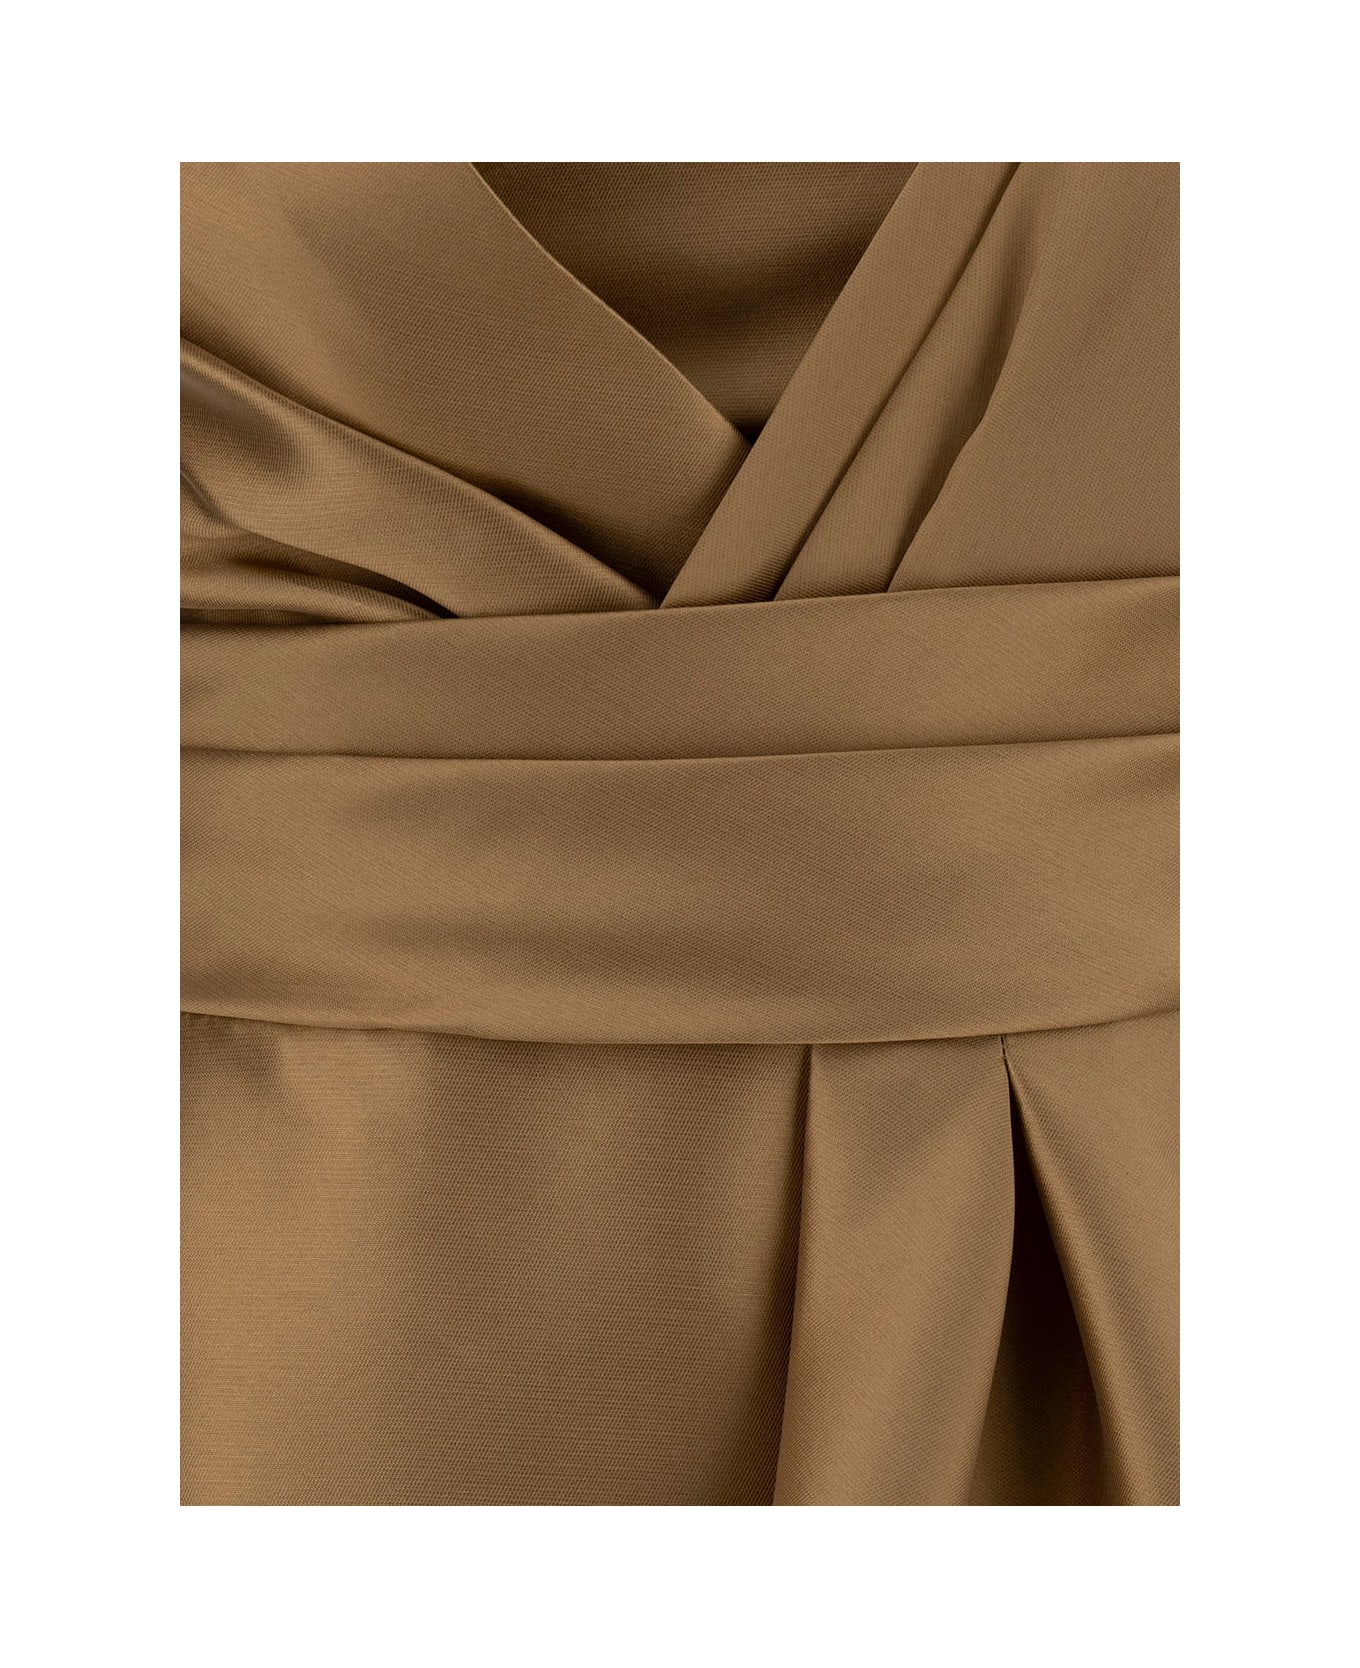 Alberta Ferretti 'mikado' Beige Maxi One-shoulder Draped Dress In Satin Woman - Beige ワンピース＆ドレス